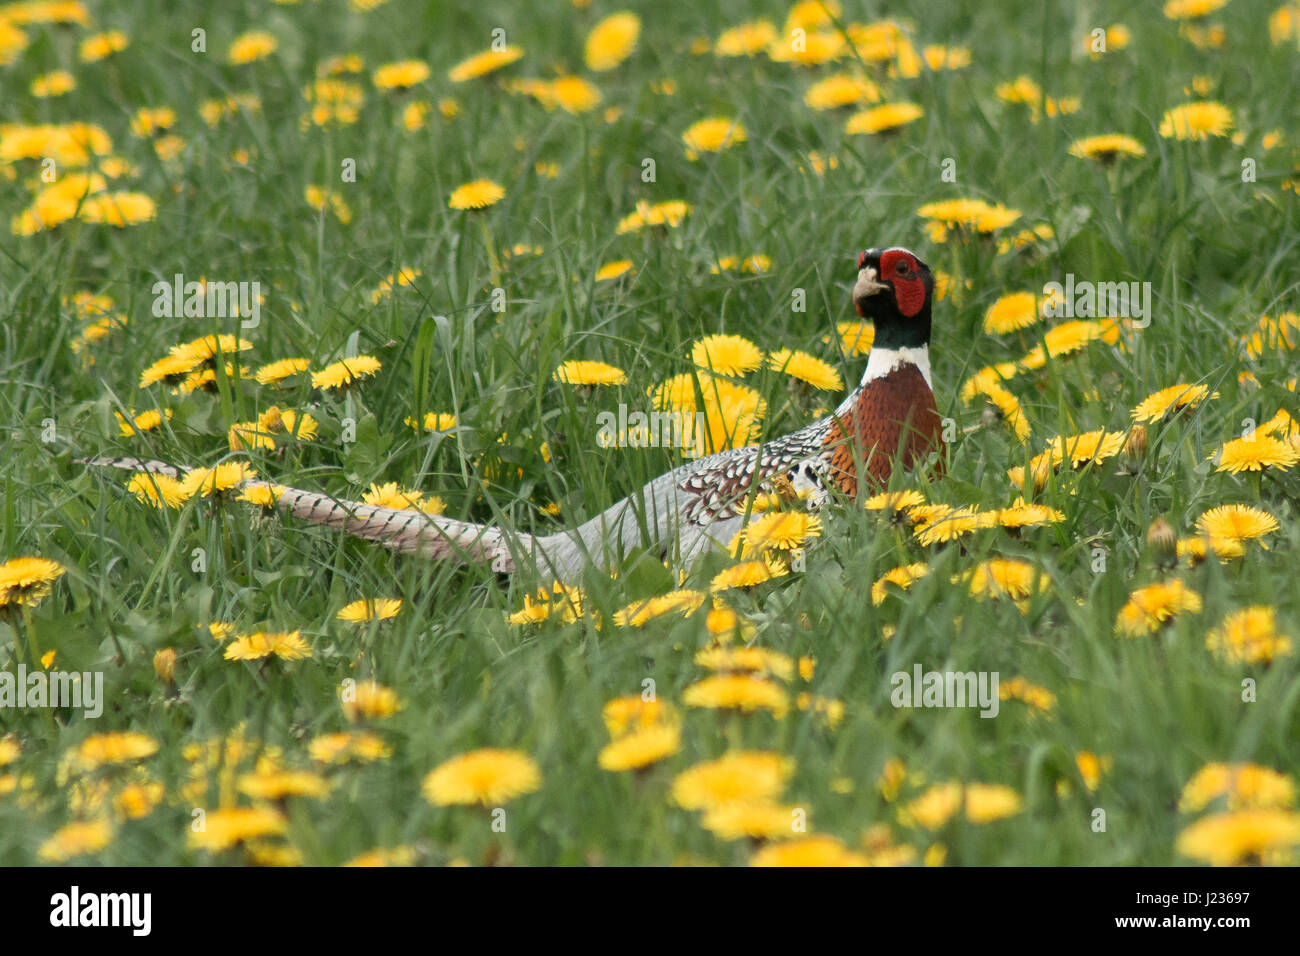 A beautiful pheasant bird flying through a dandelion field in England Stock Photo